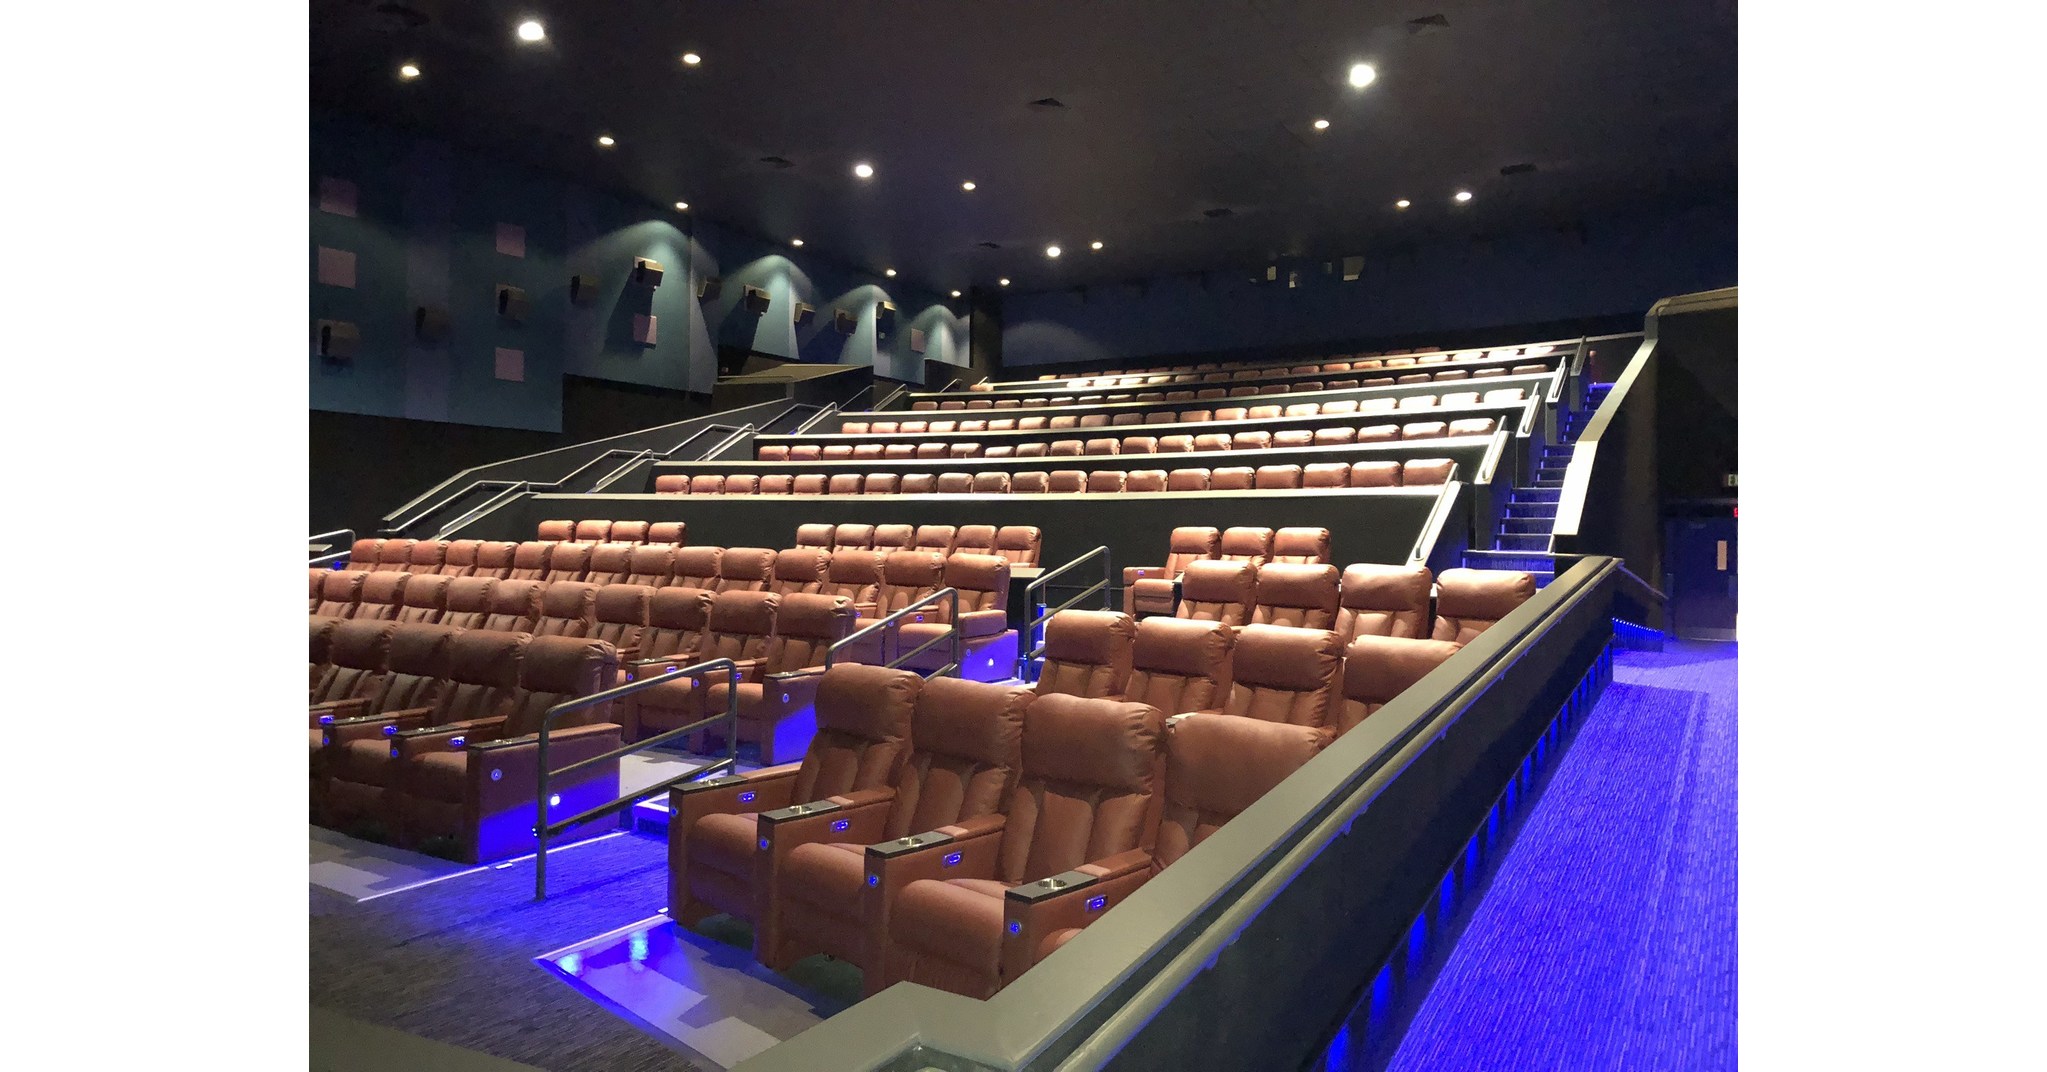 Showcase Cinema de Lux Springdale Invests in Major Theater Seat